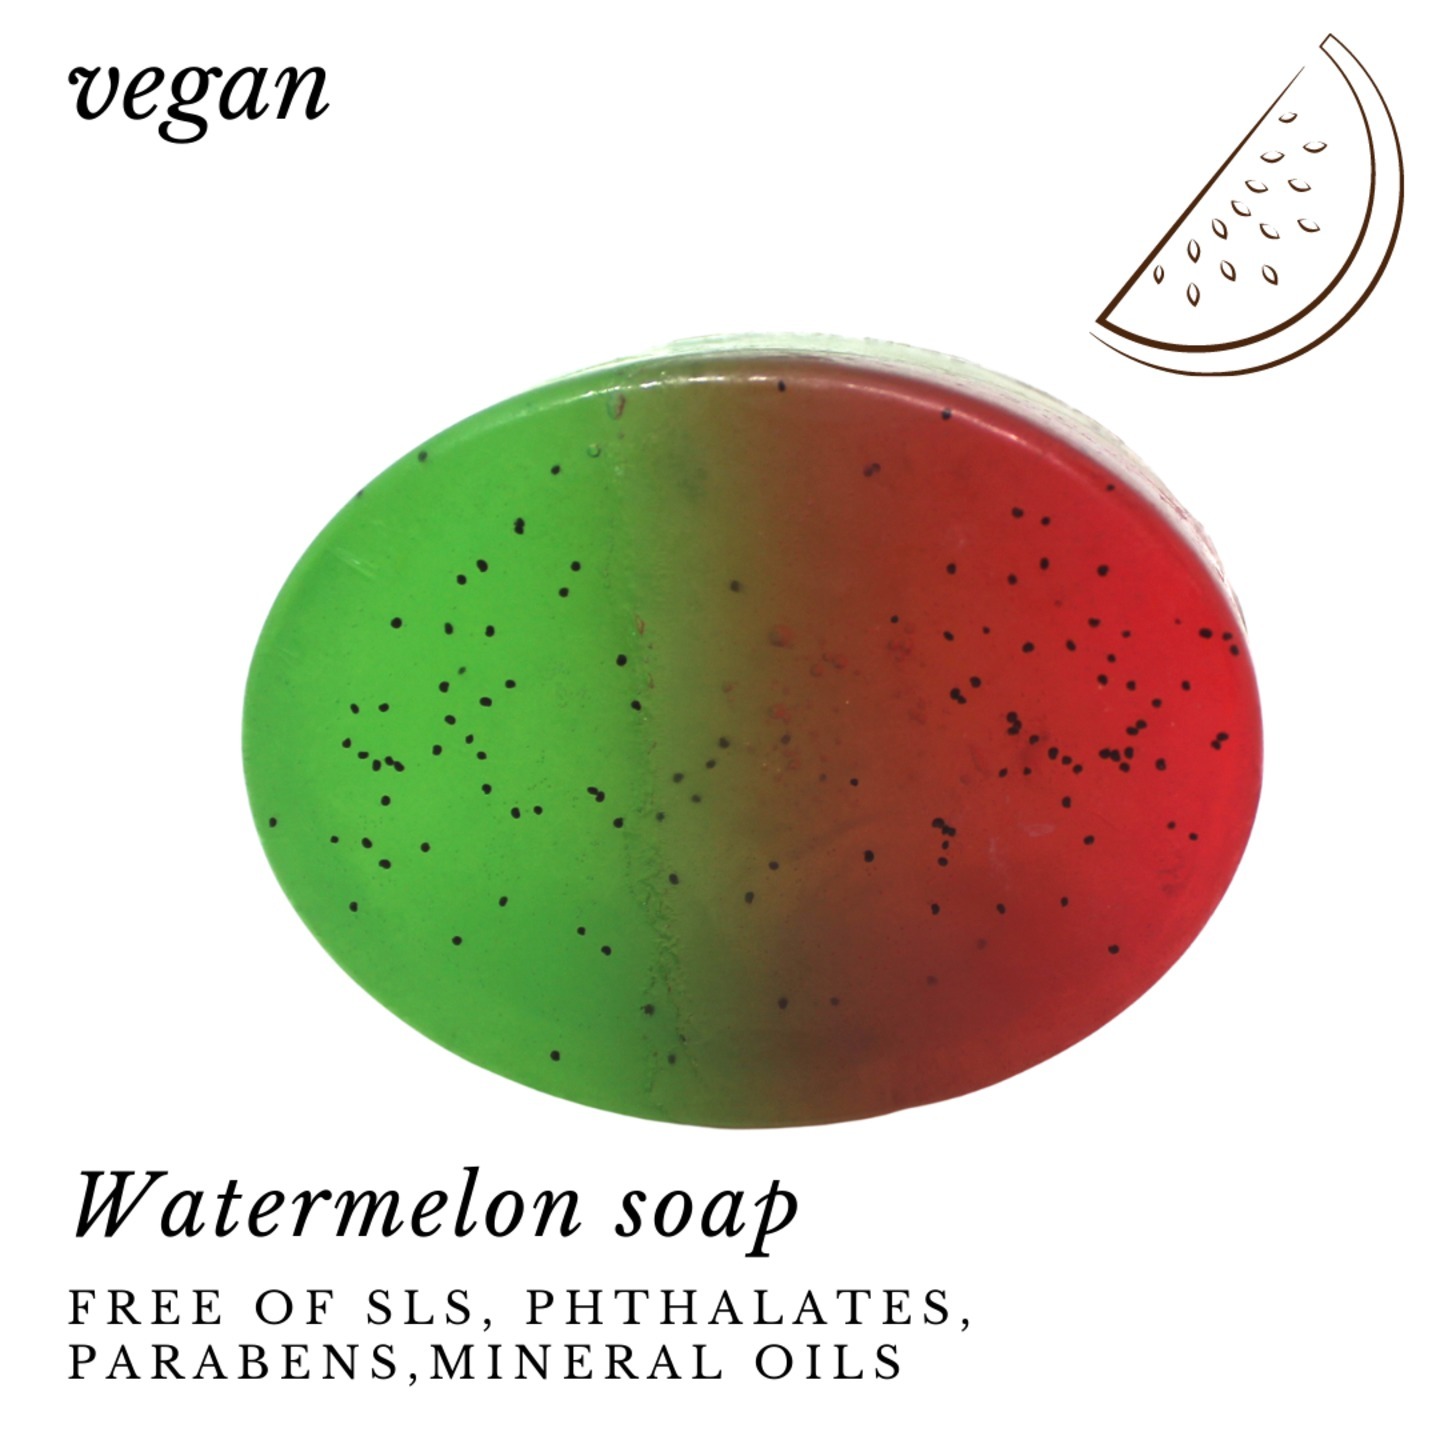 Fuschia - Watermelon Natural Handmade Glycerine Soap